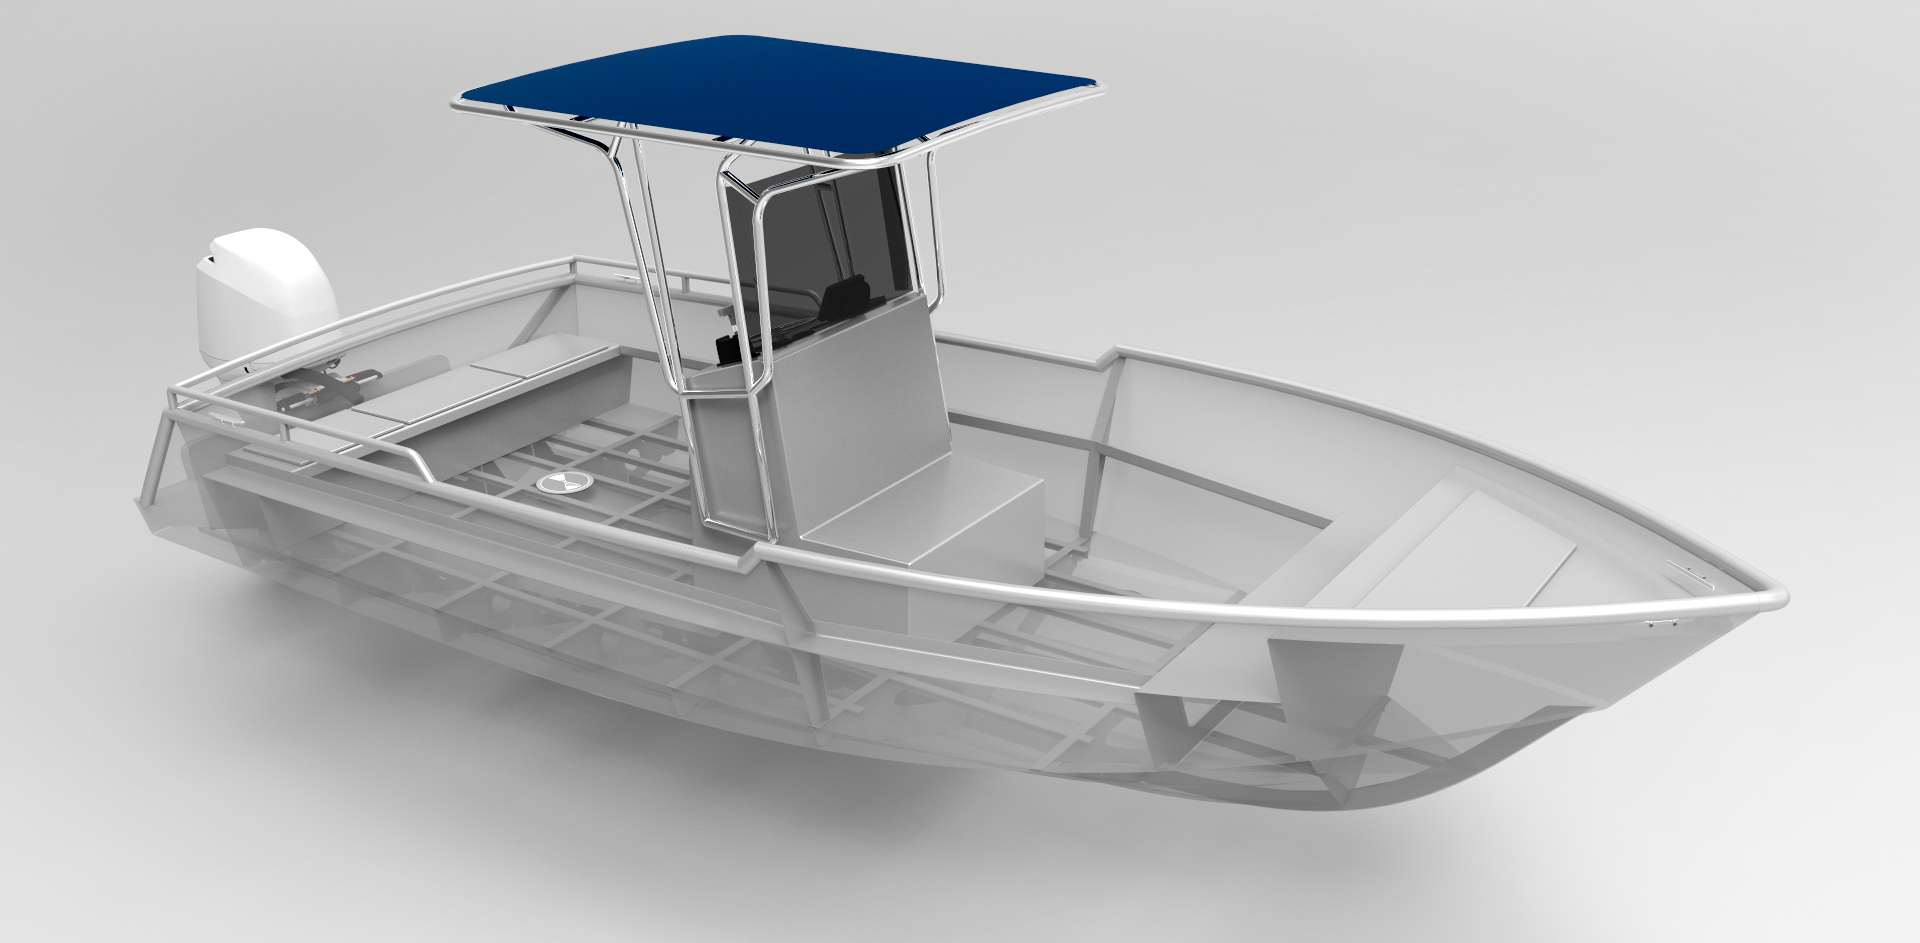 Walkaround 20 - Metal Boat Kits